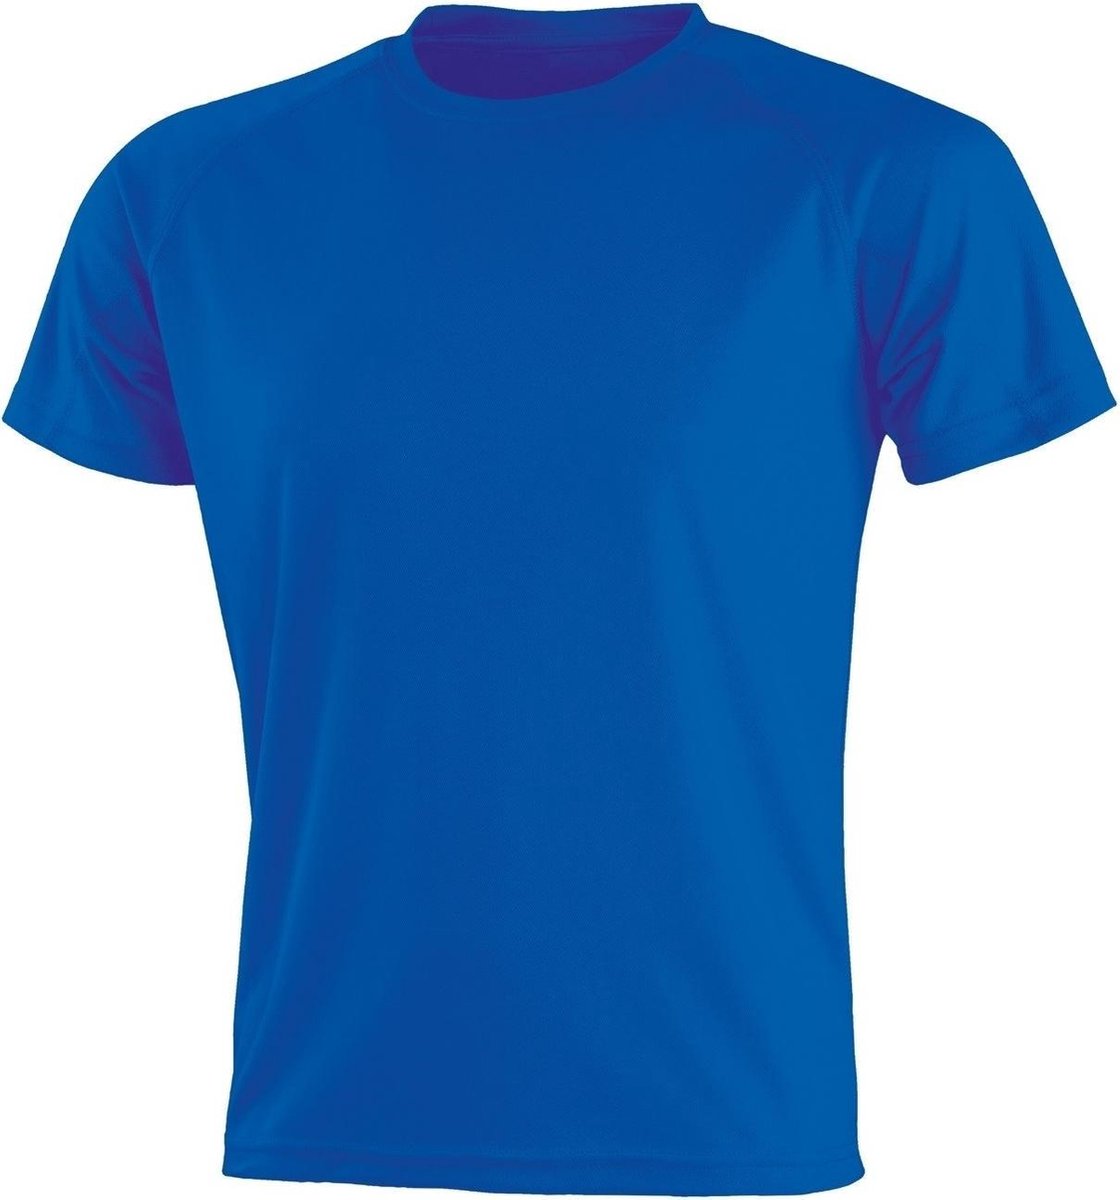 Senvi Sports Performance T-Shirt- Royal - XS - Unisex